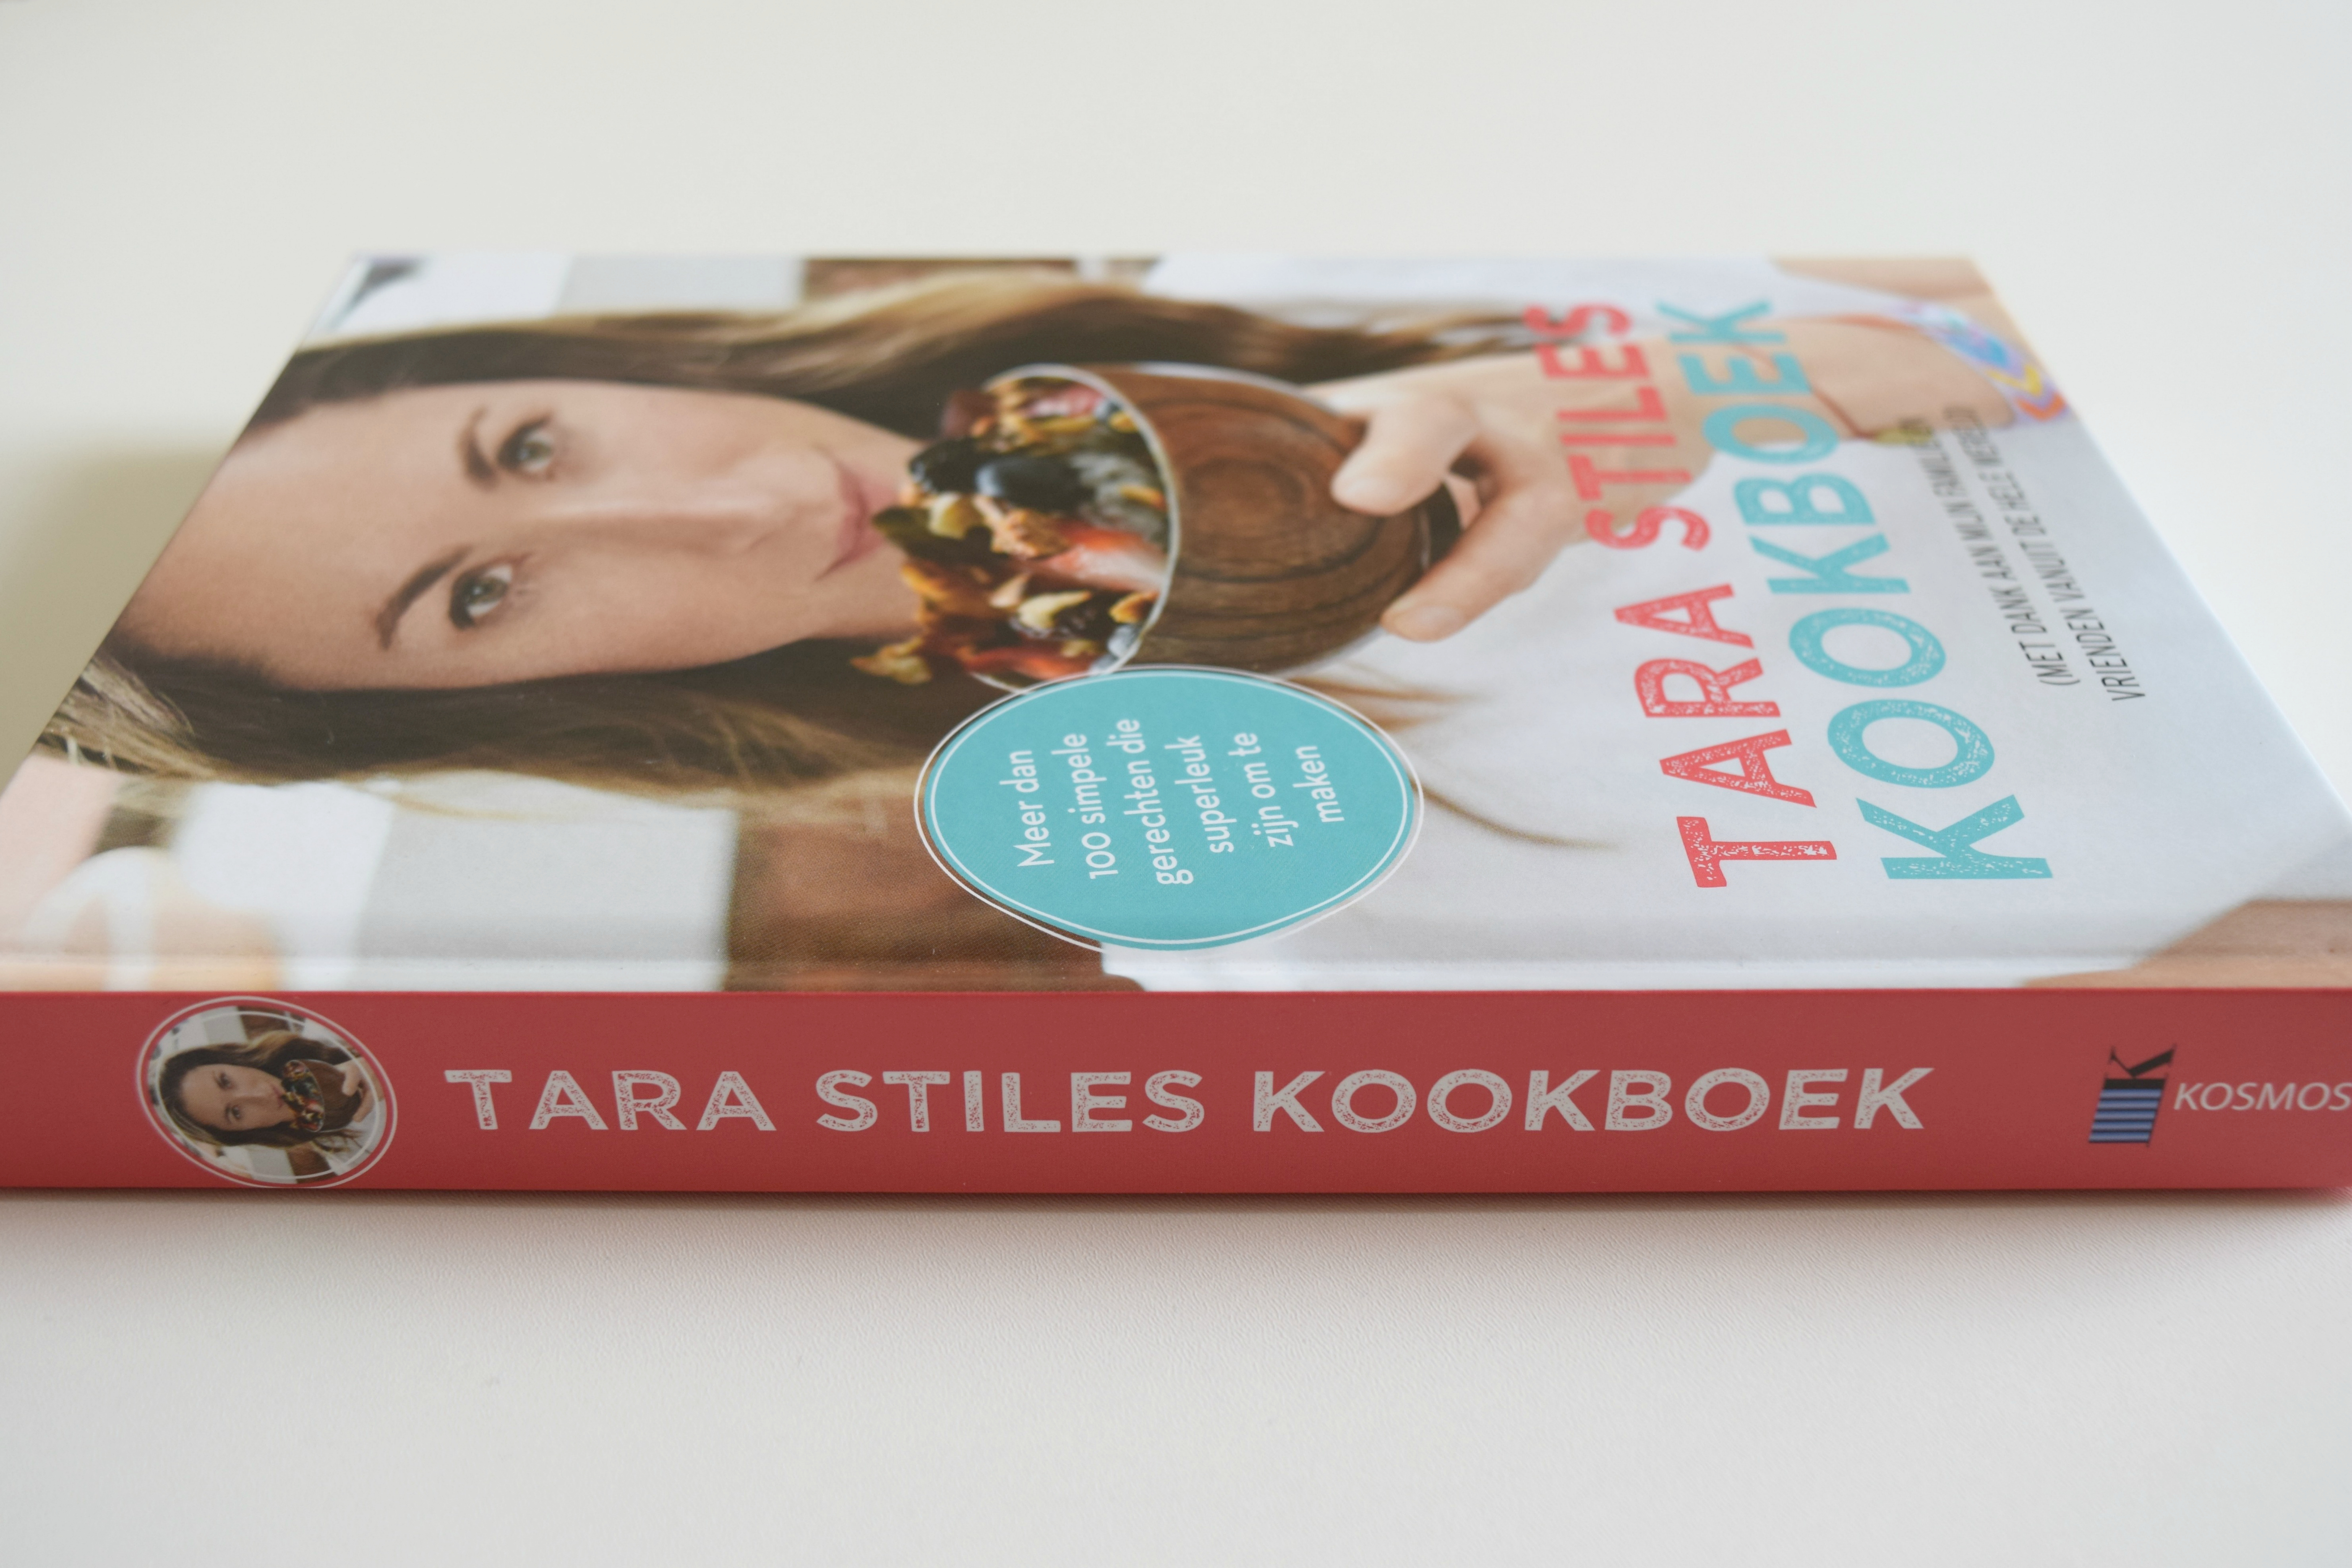 Tara Stiles kookboek 